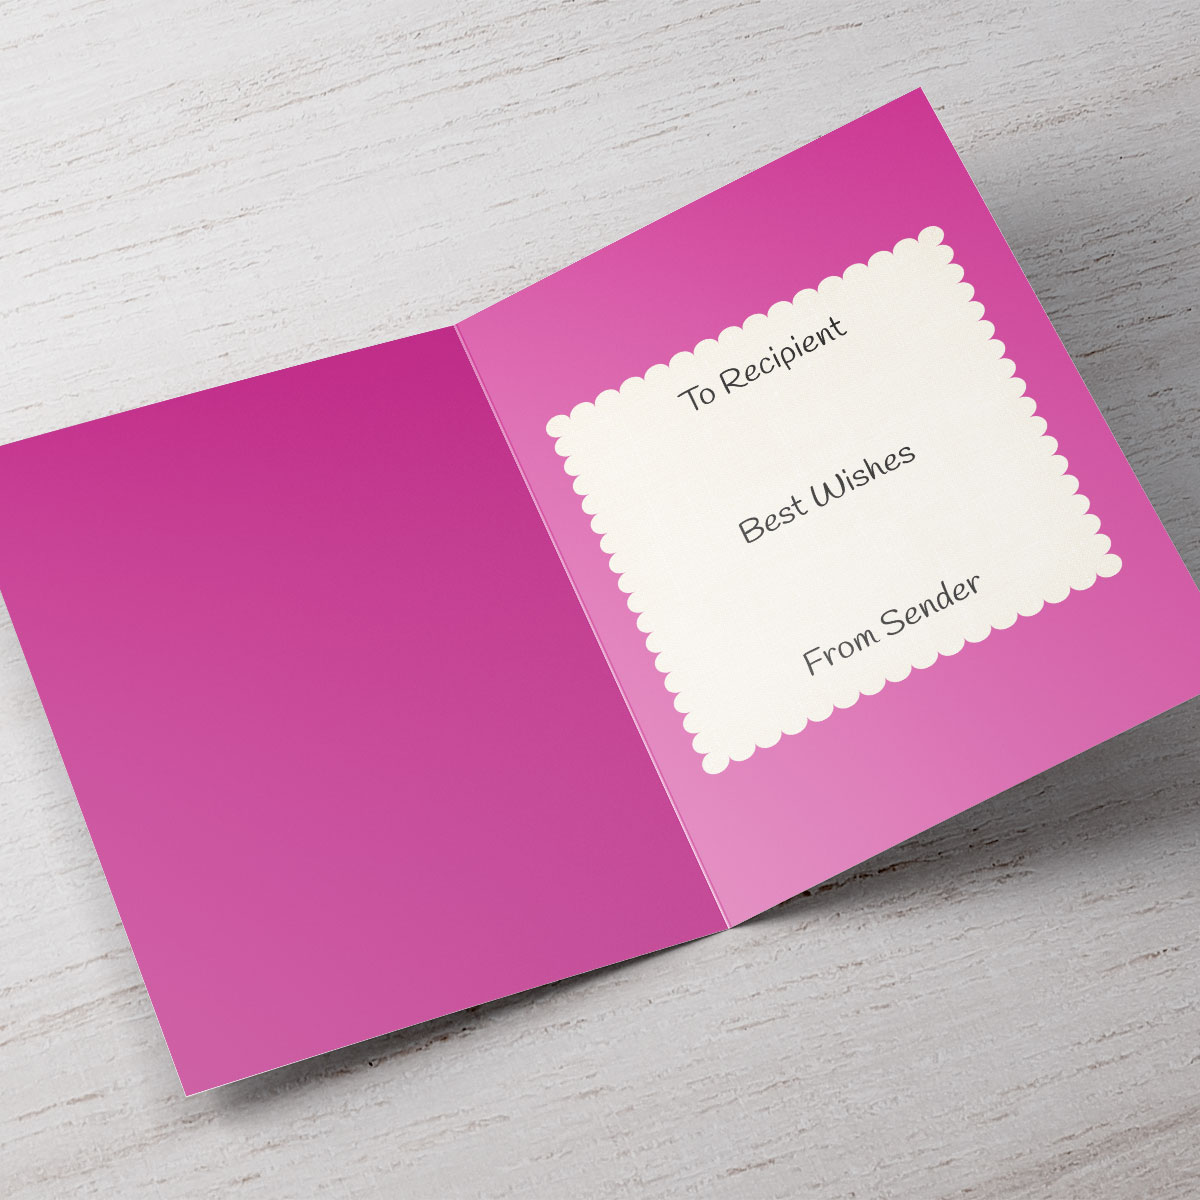 Personalised Retirement Card - Pink & Purple Roses